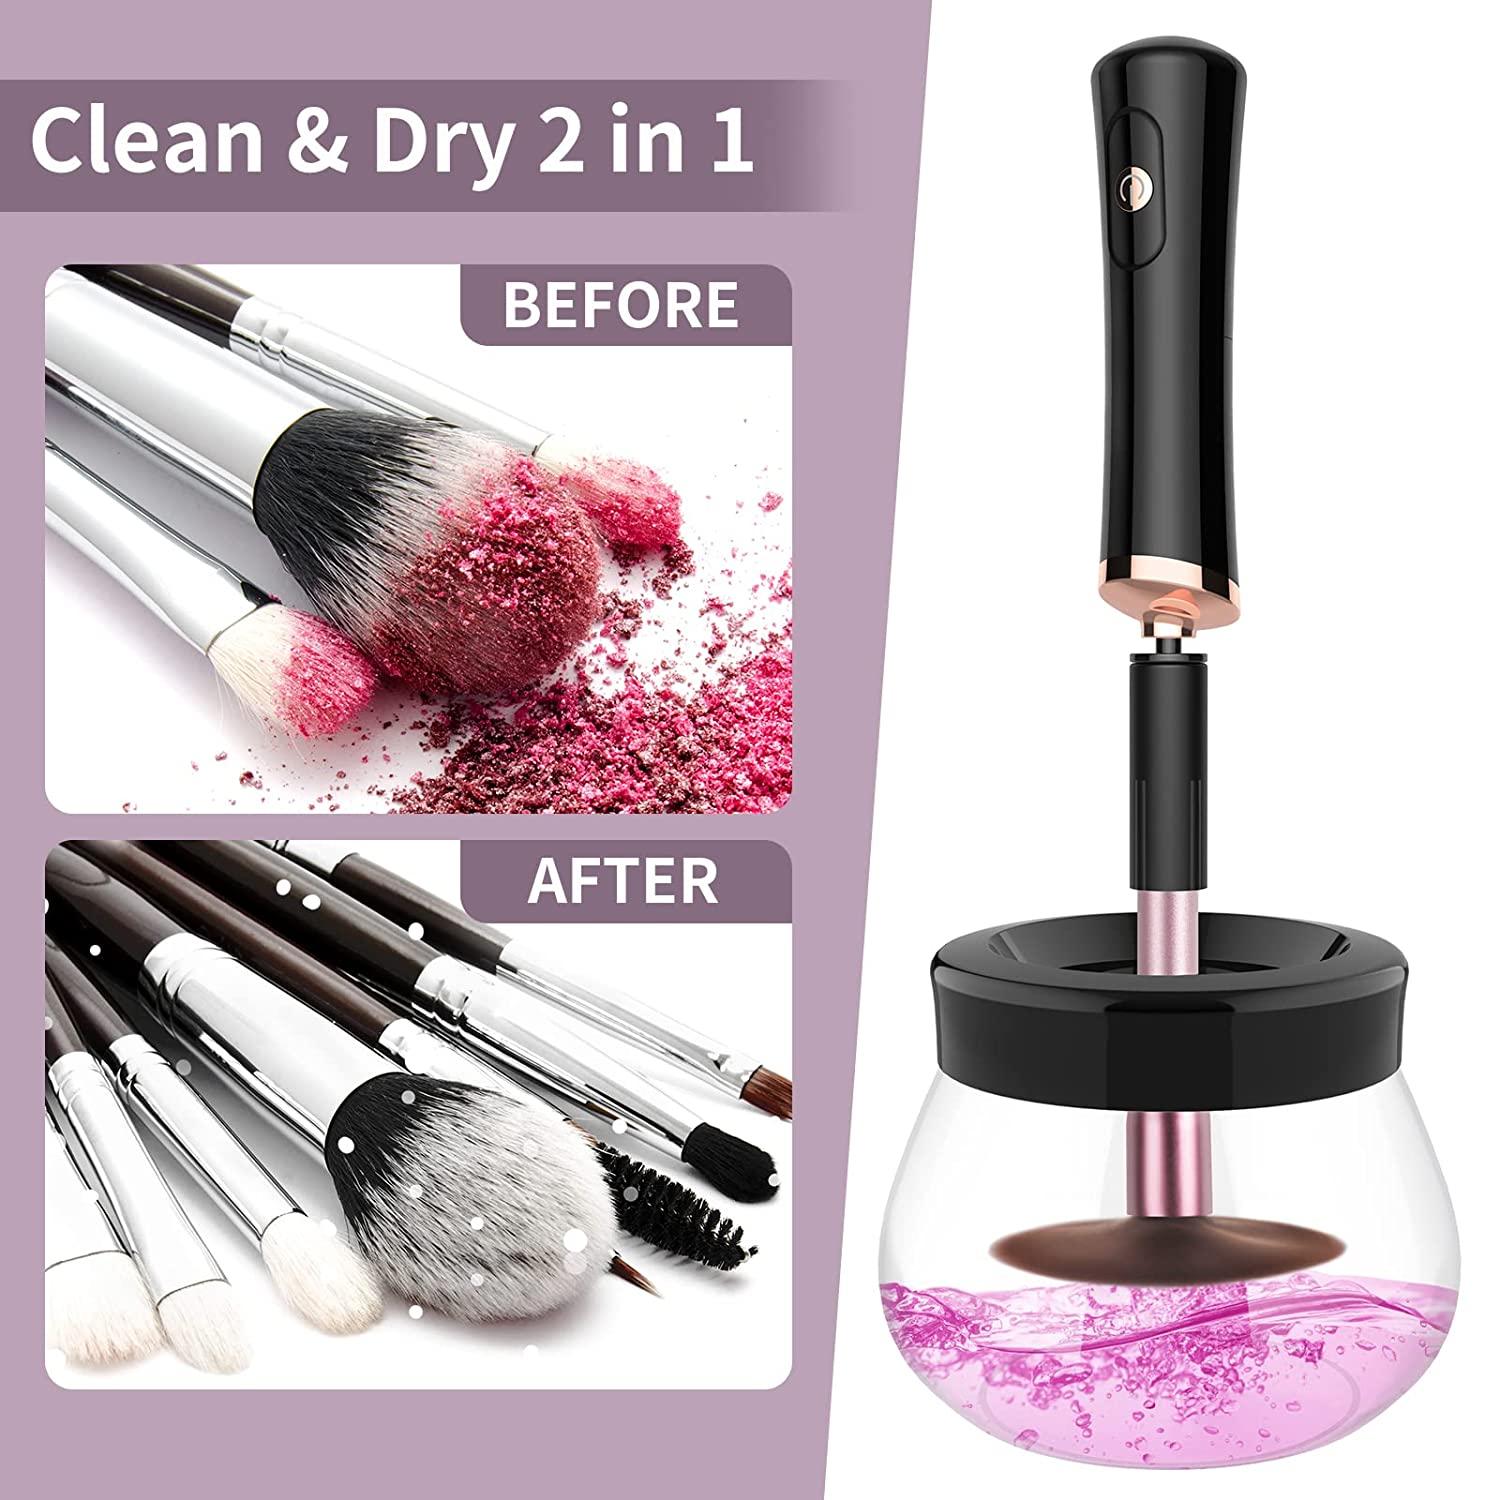 Make Up Brush Cleaner & Dryer Best, Electric Make Up Brush Spinner